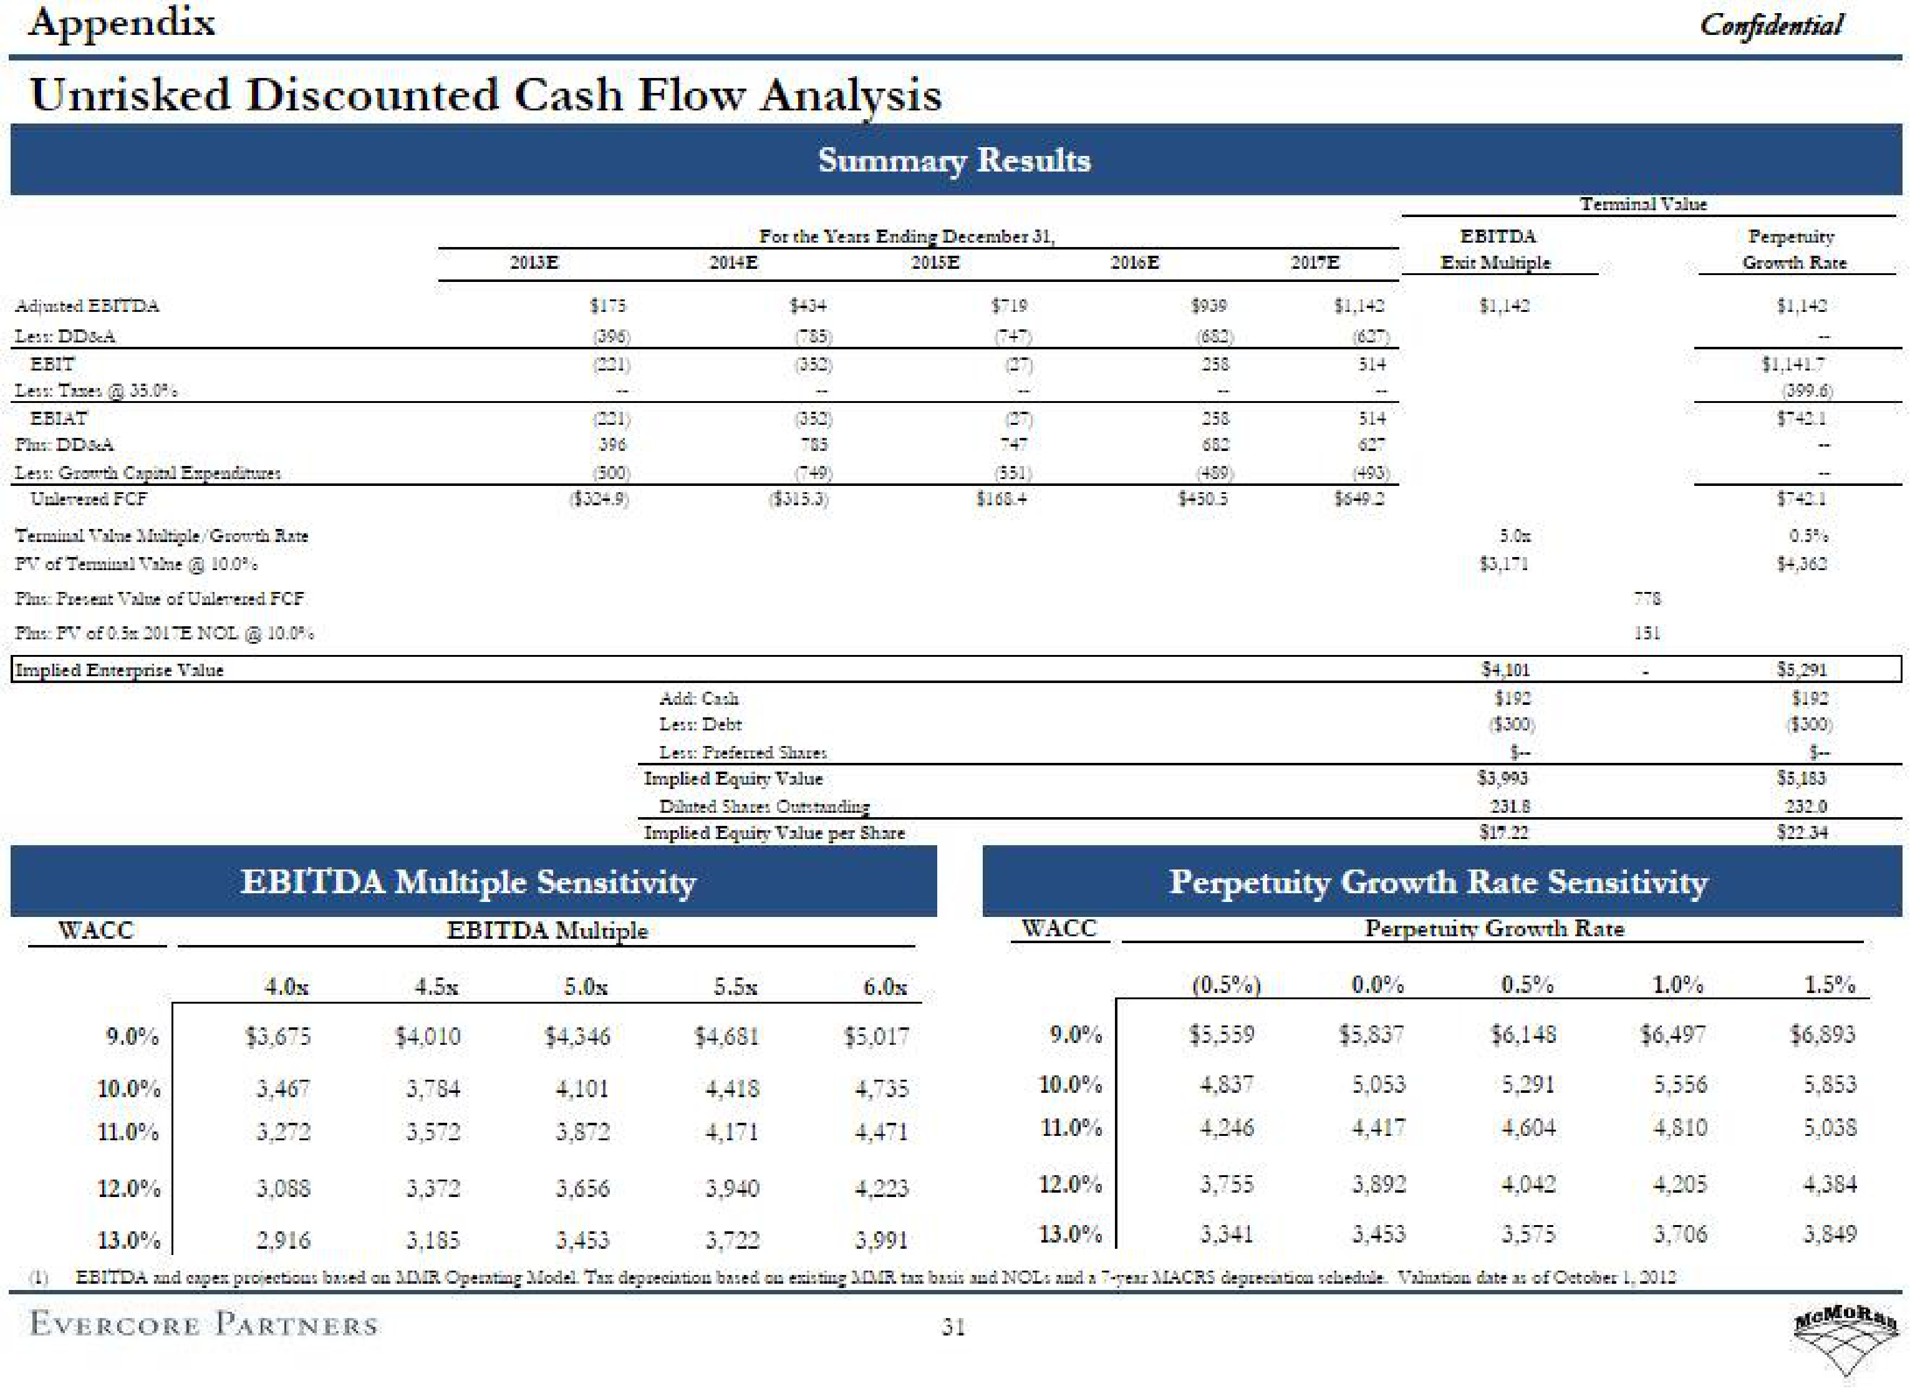 appendix confidential unrisked discounted cash flow analysis | Evercore